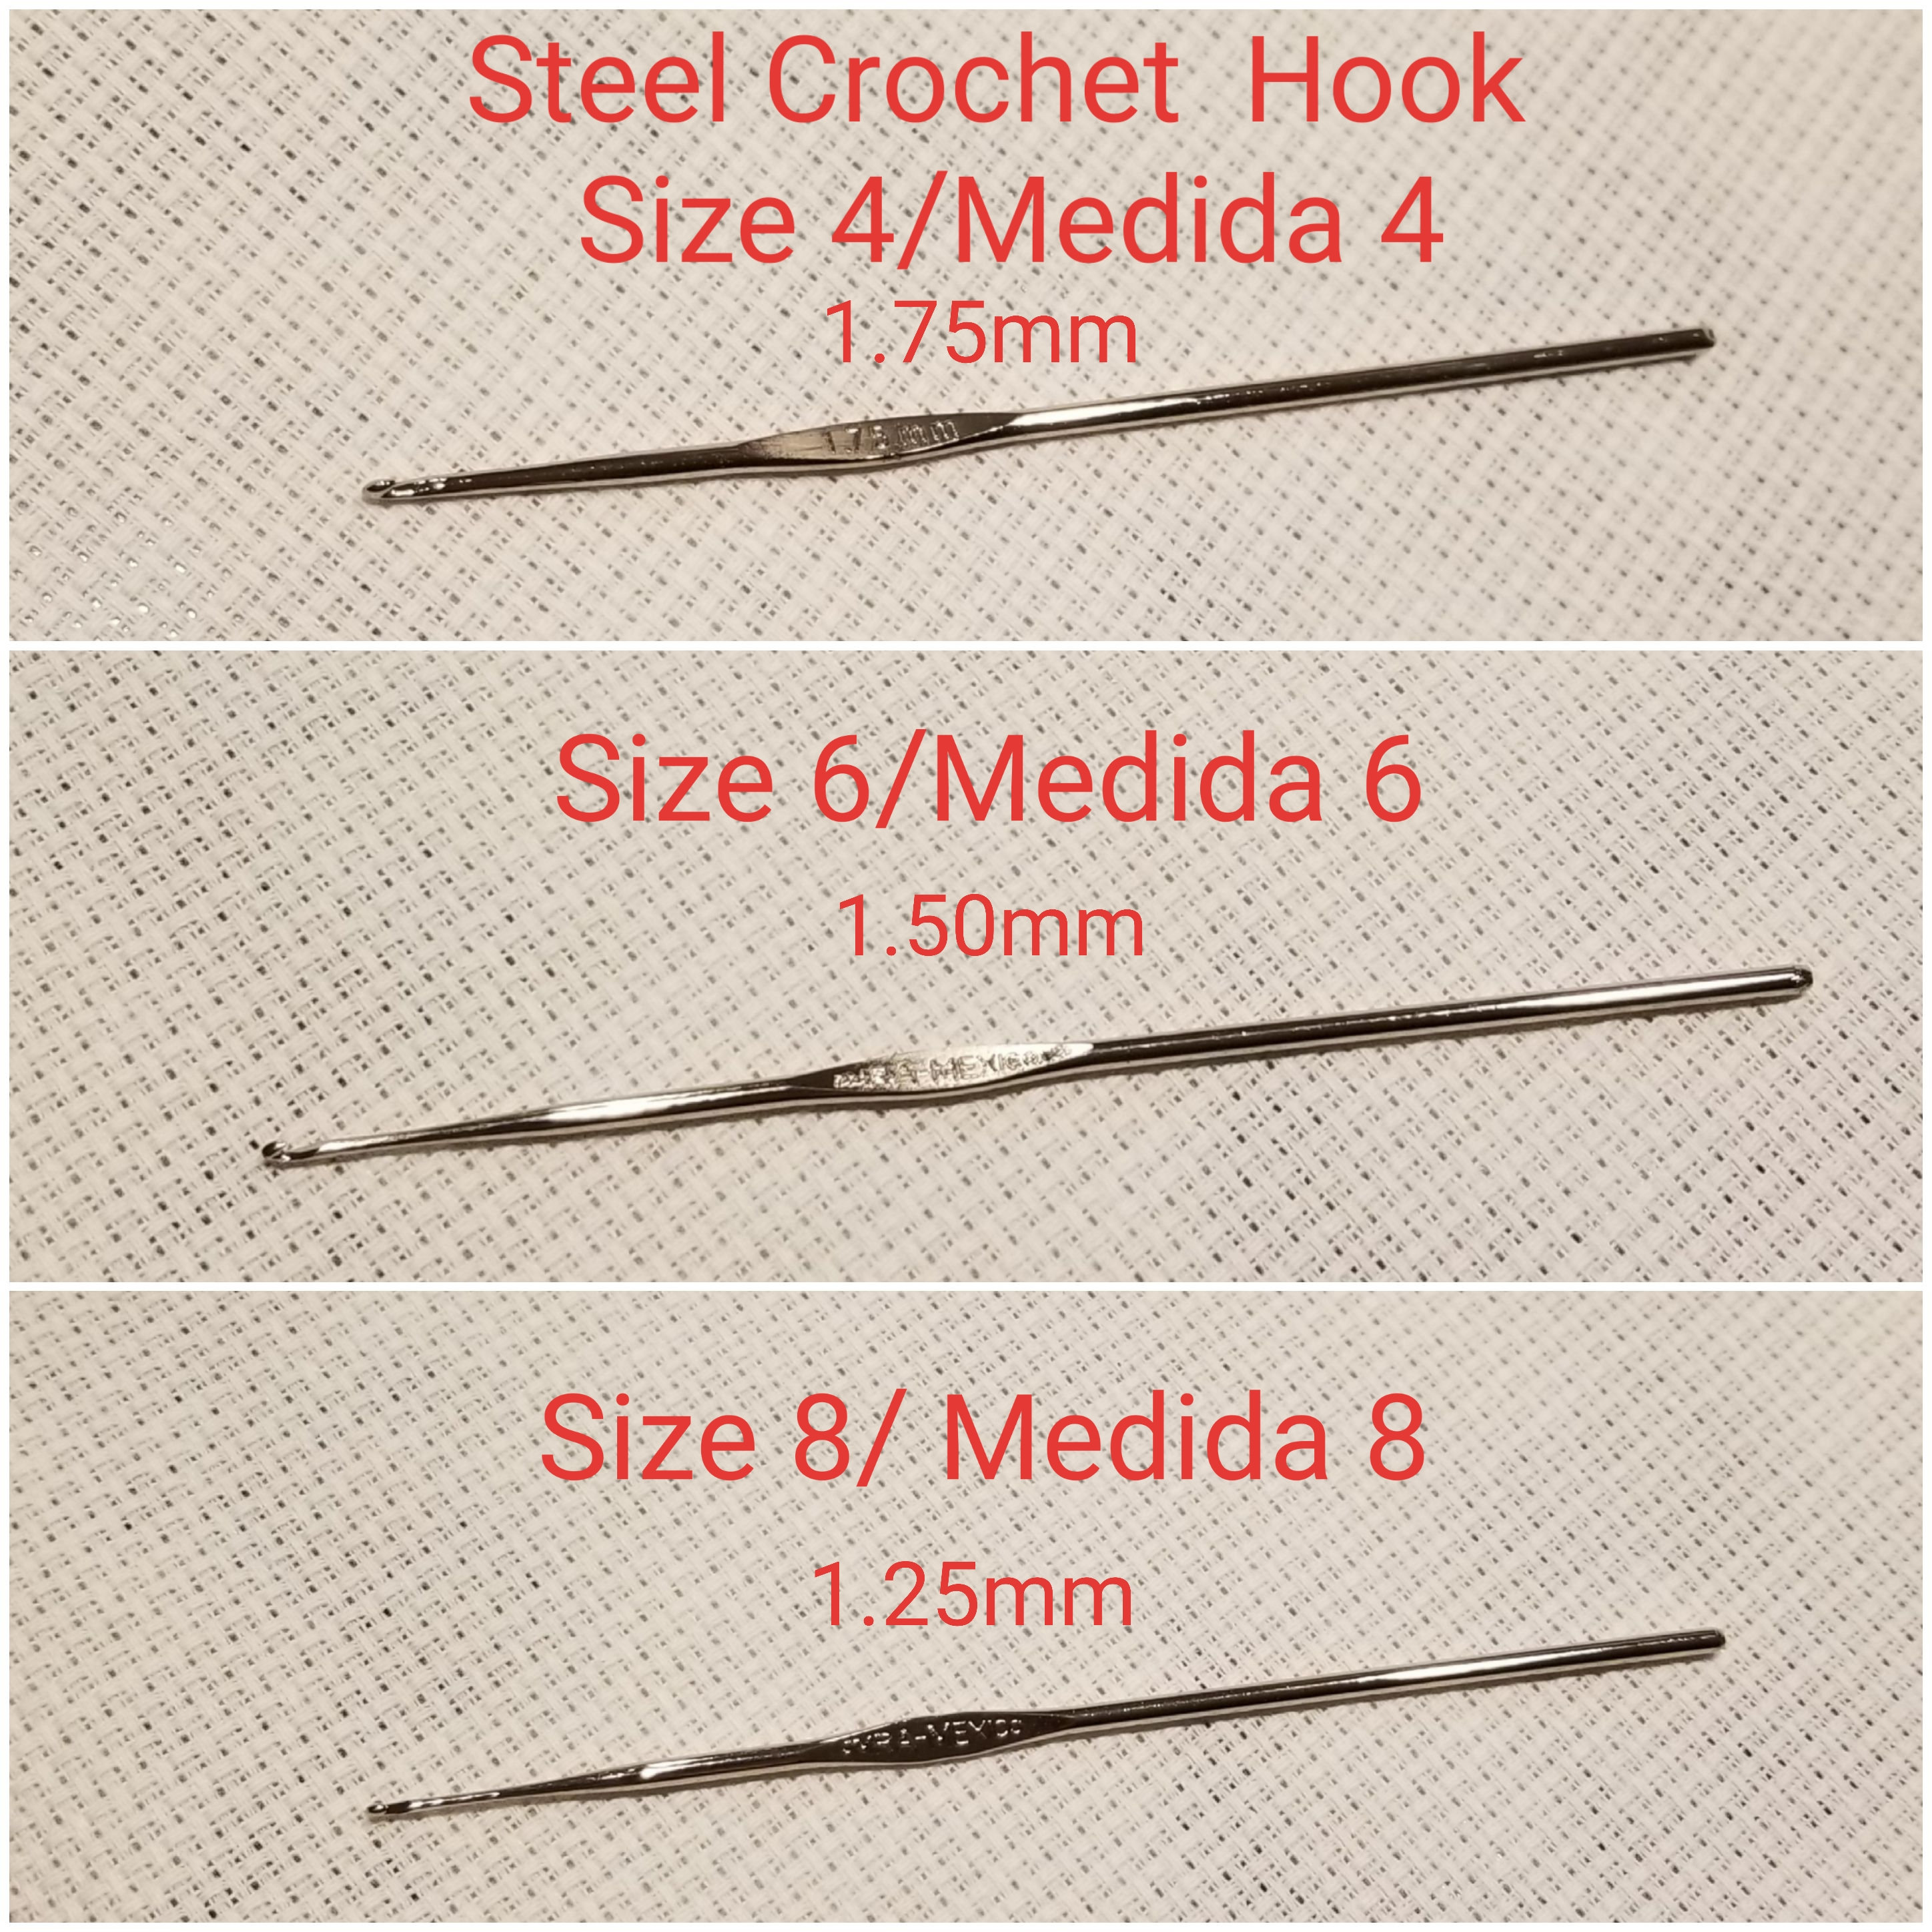  Boye Steel Crochet Hook Set 6 Pack - Sizes 0, 1, 7, 8, 9, 10  (3.25mm, 2.75mm, 1.65mm, 1.5mm, 1.4mm, 1.3mm)